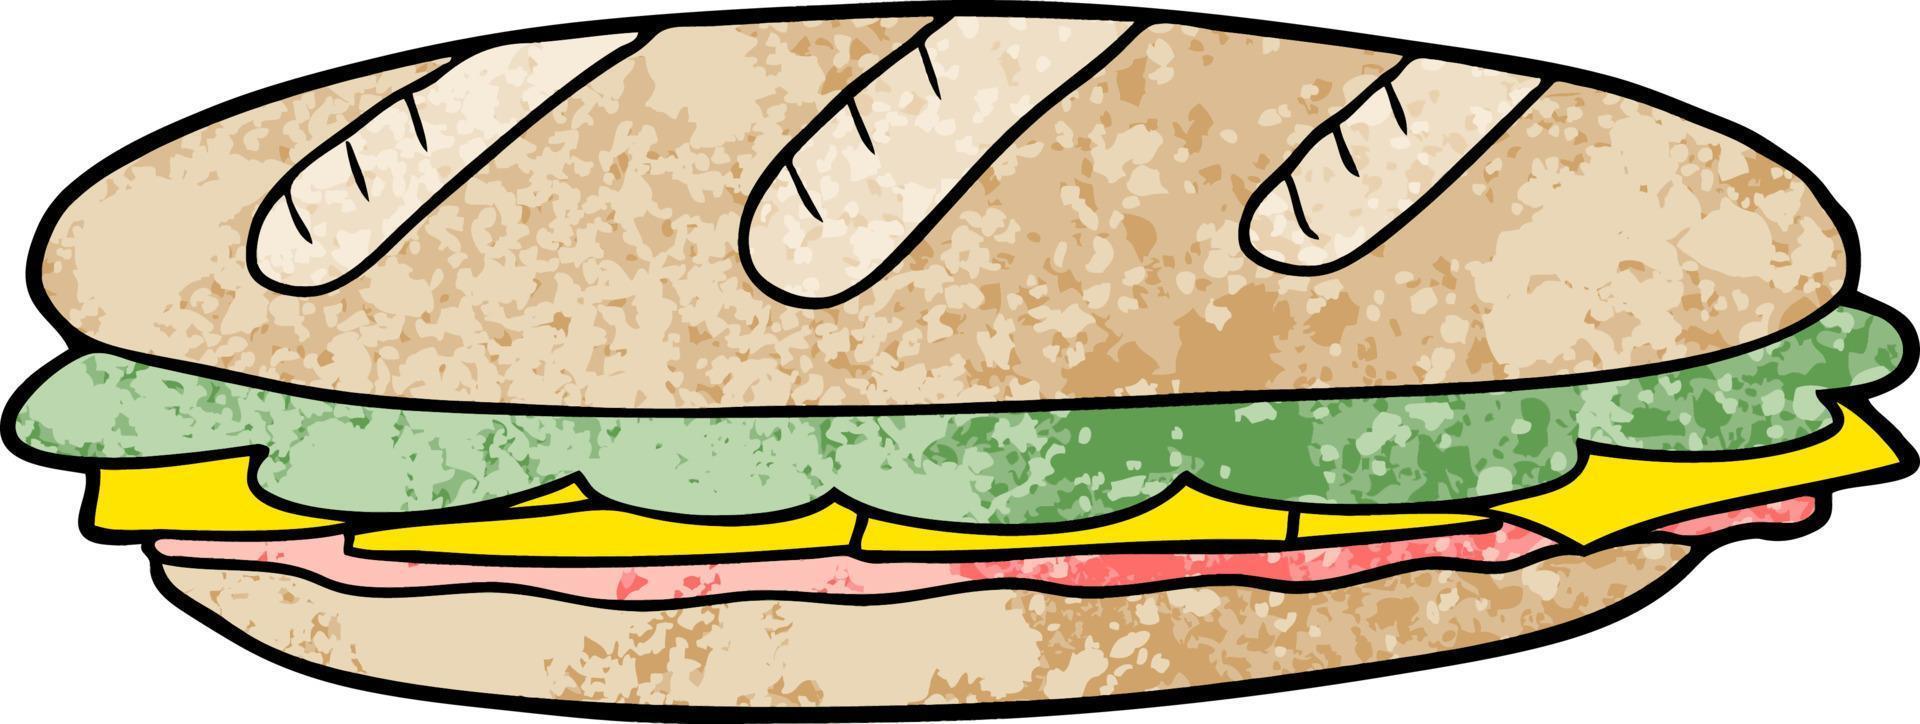 sanduíche de baguete de desenho animado vetor